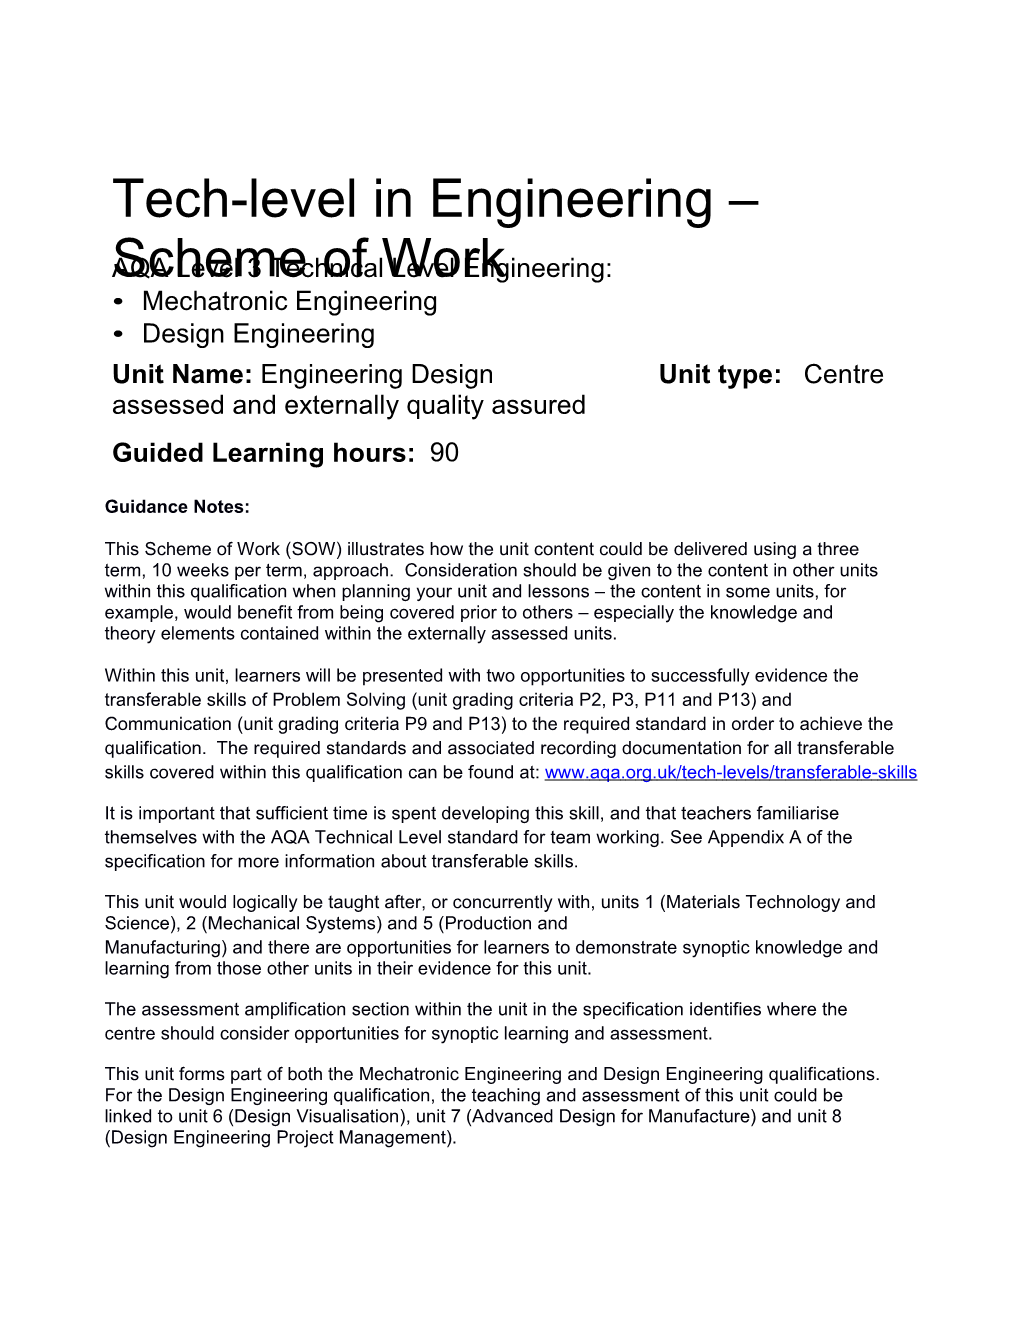 Tech-Level in Engineering Scheme of Work